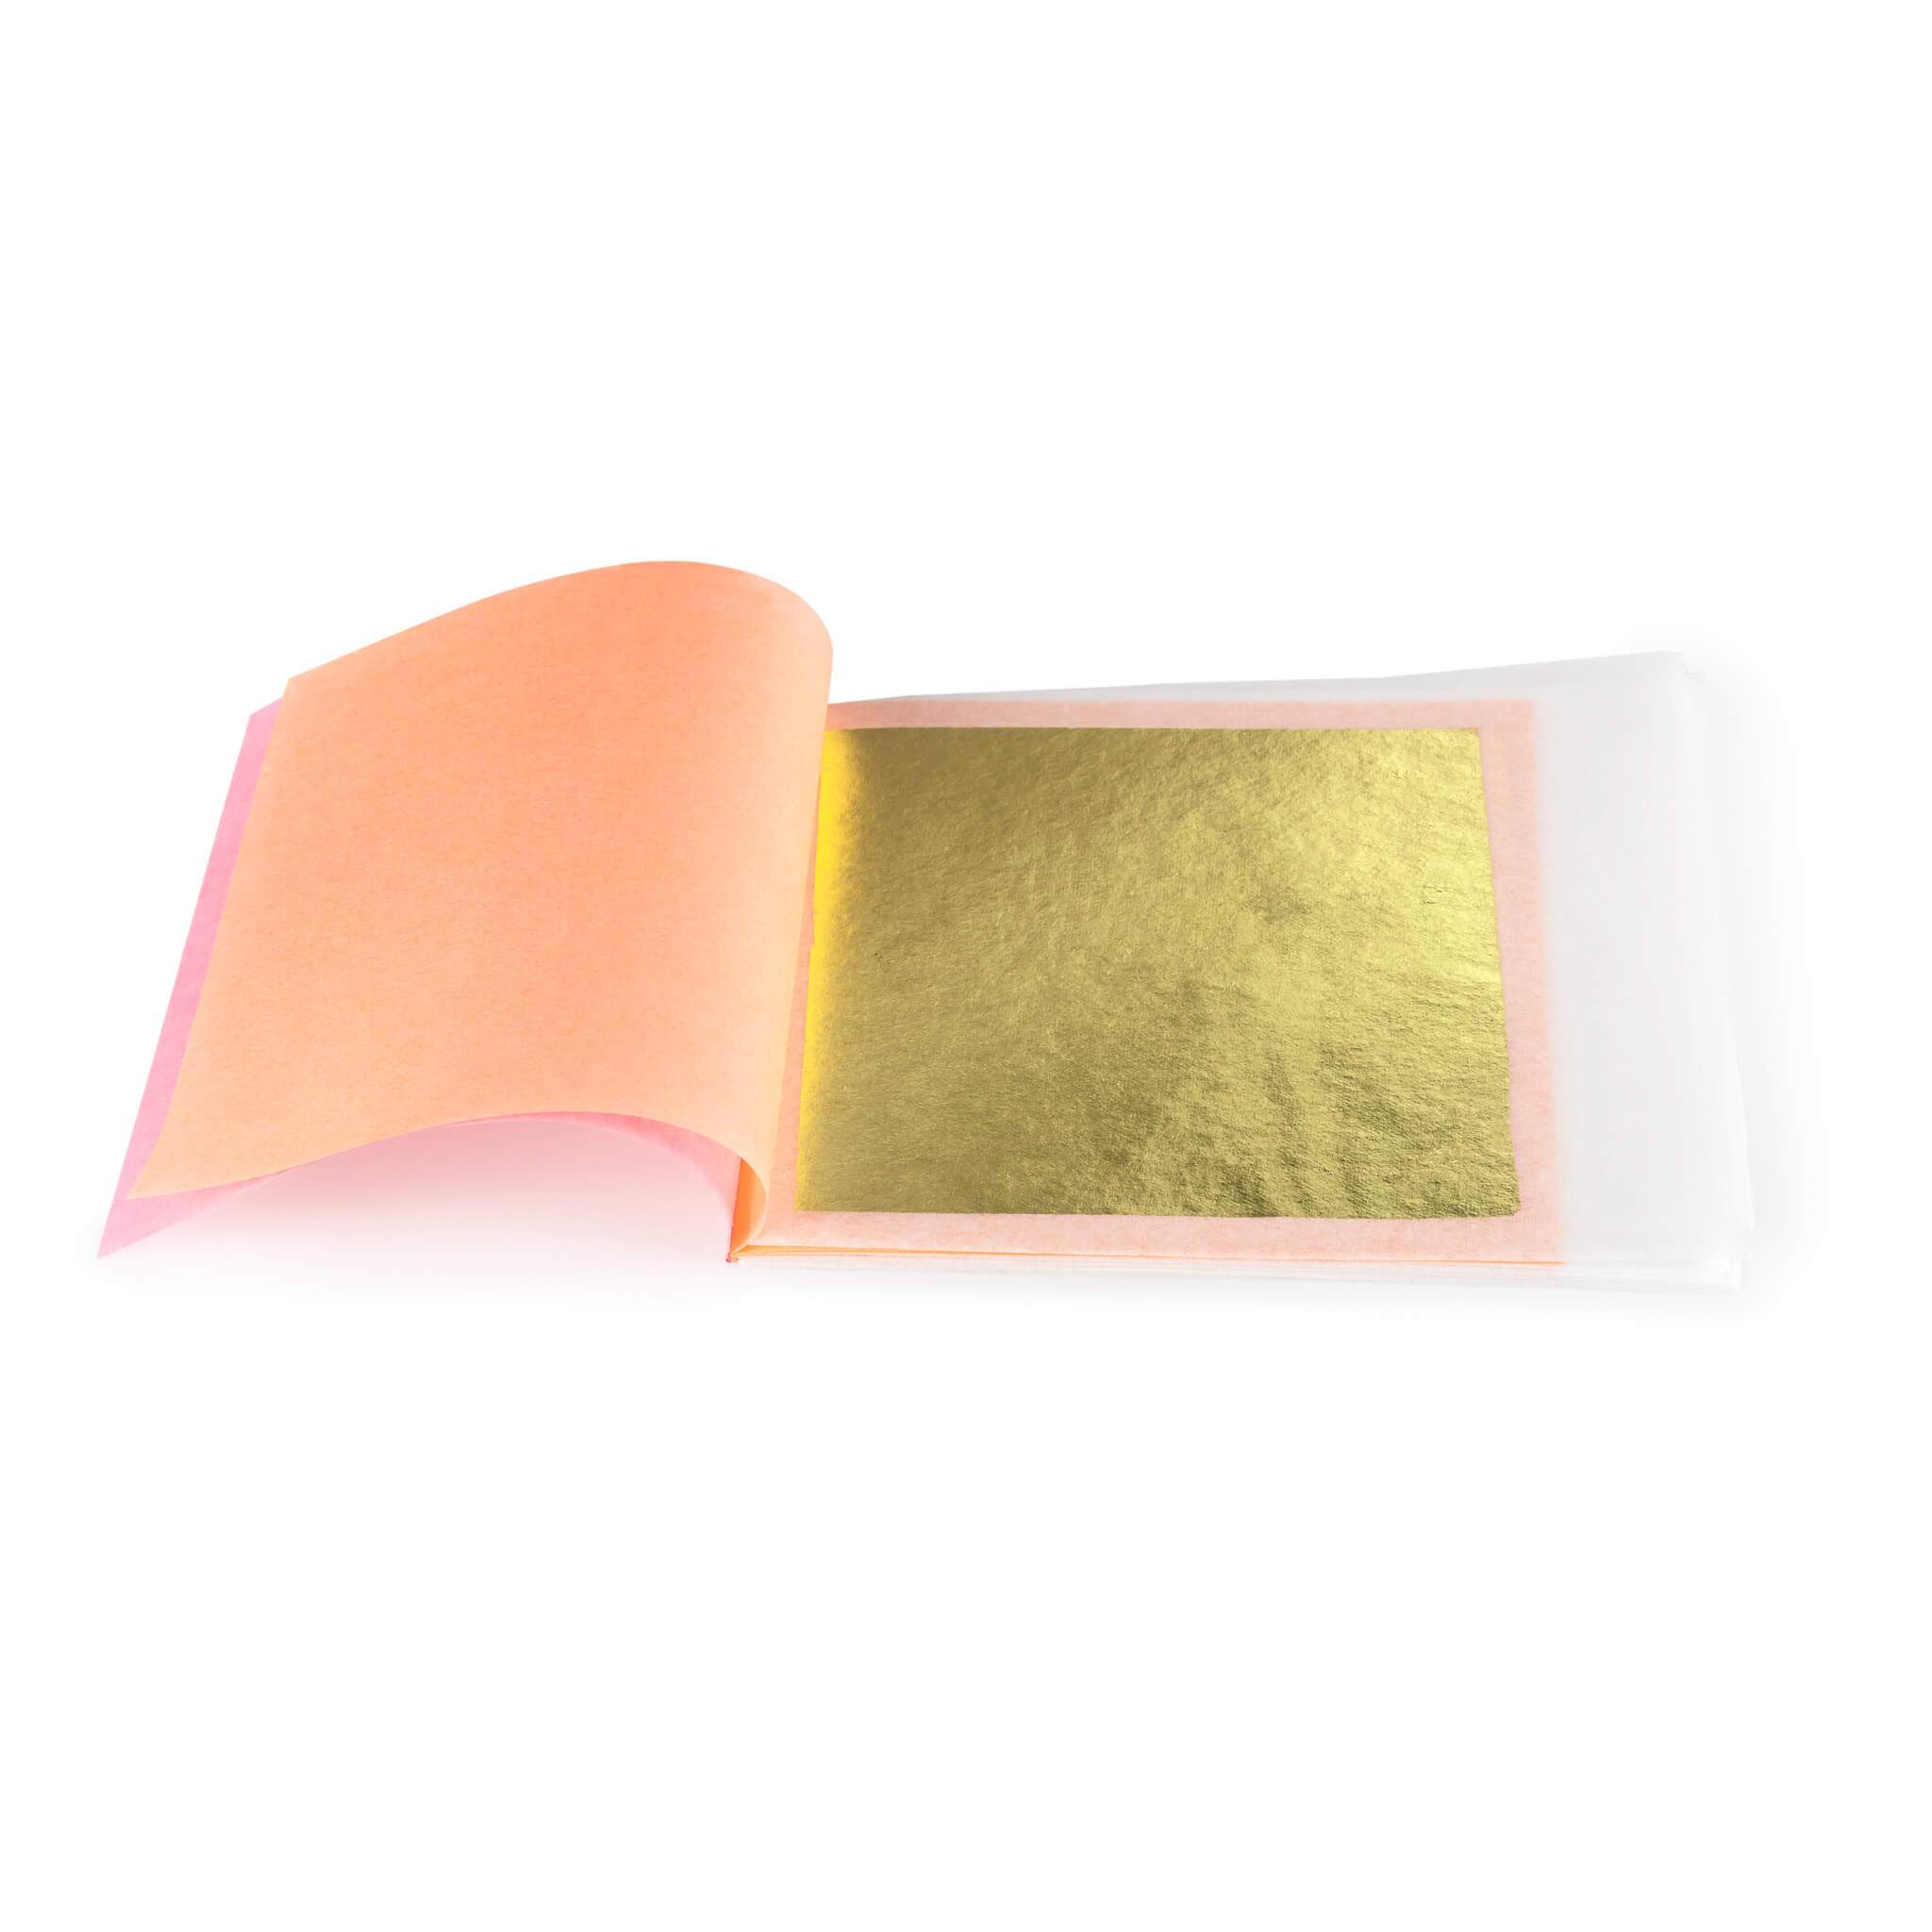 24K Edible Gold Transfer Sheets, Hard Press Metal leaf Slofoodgroup 